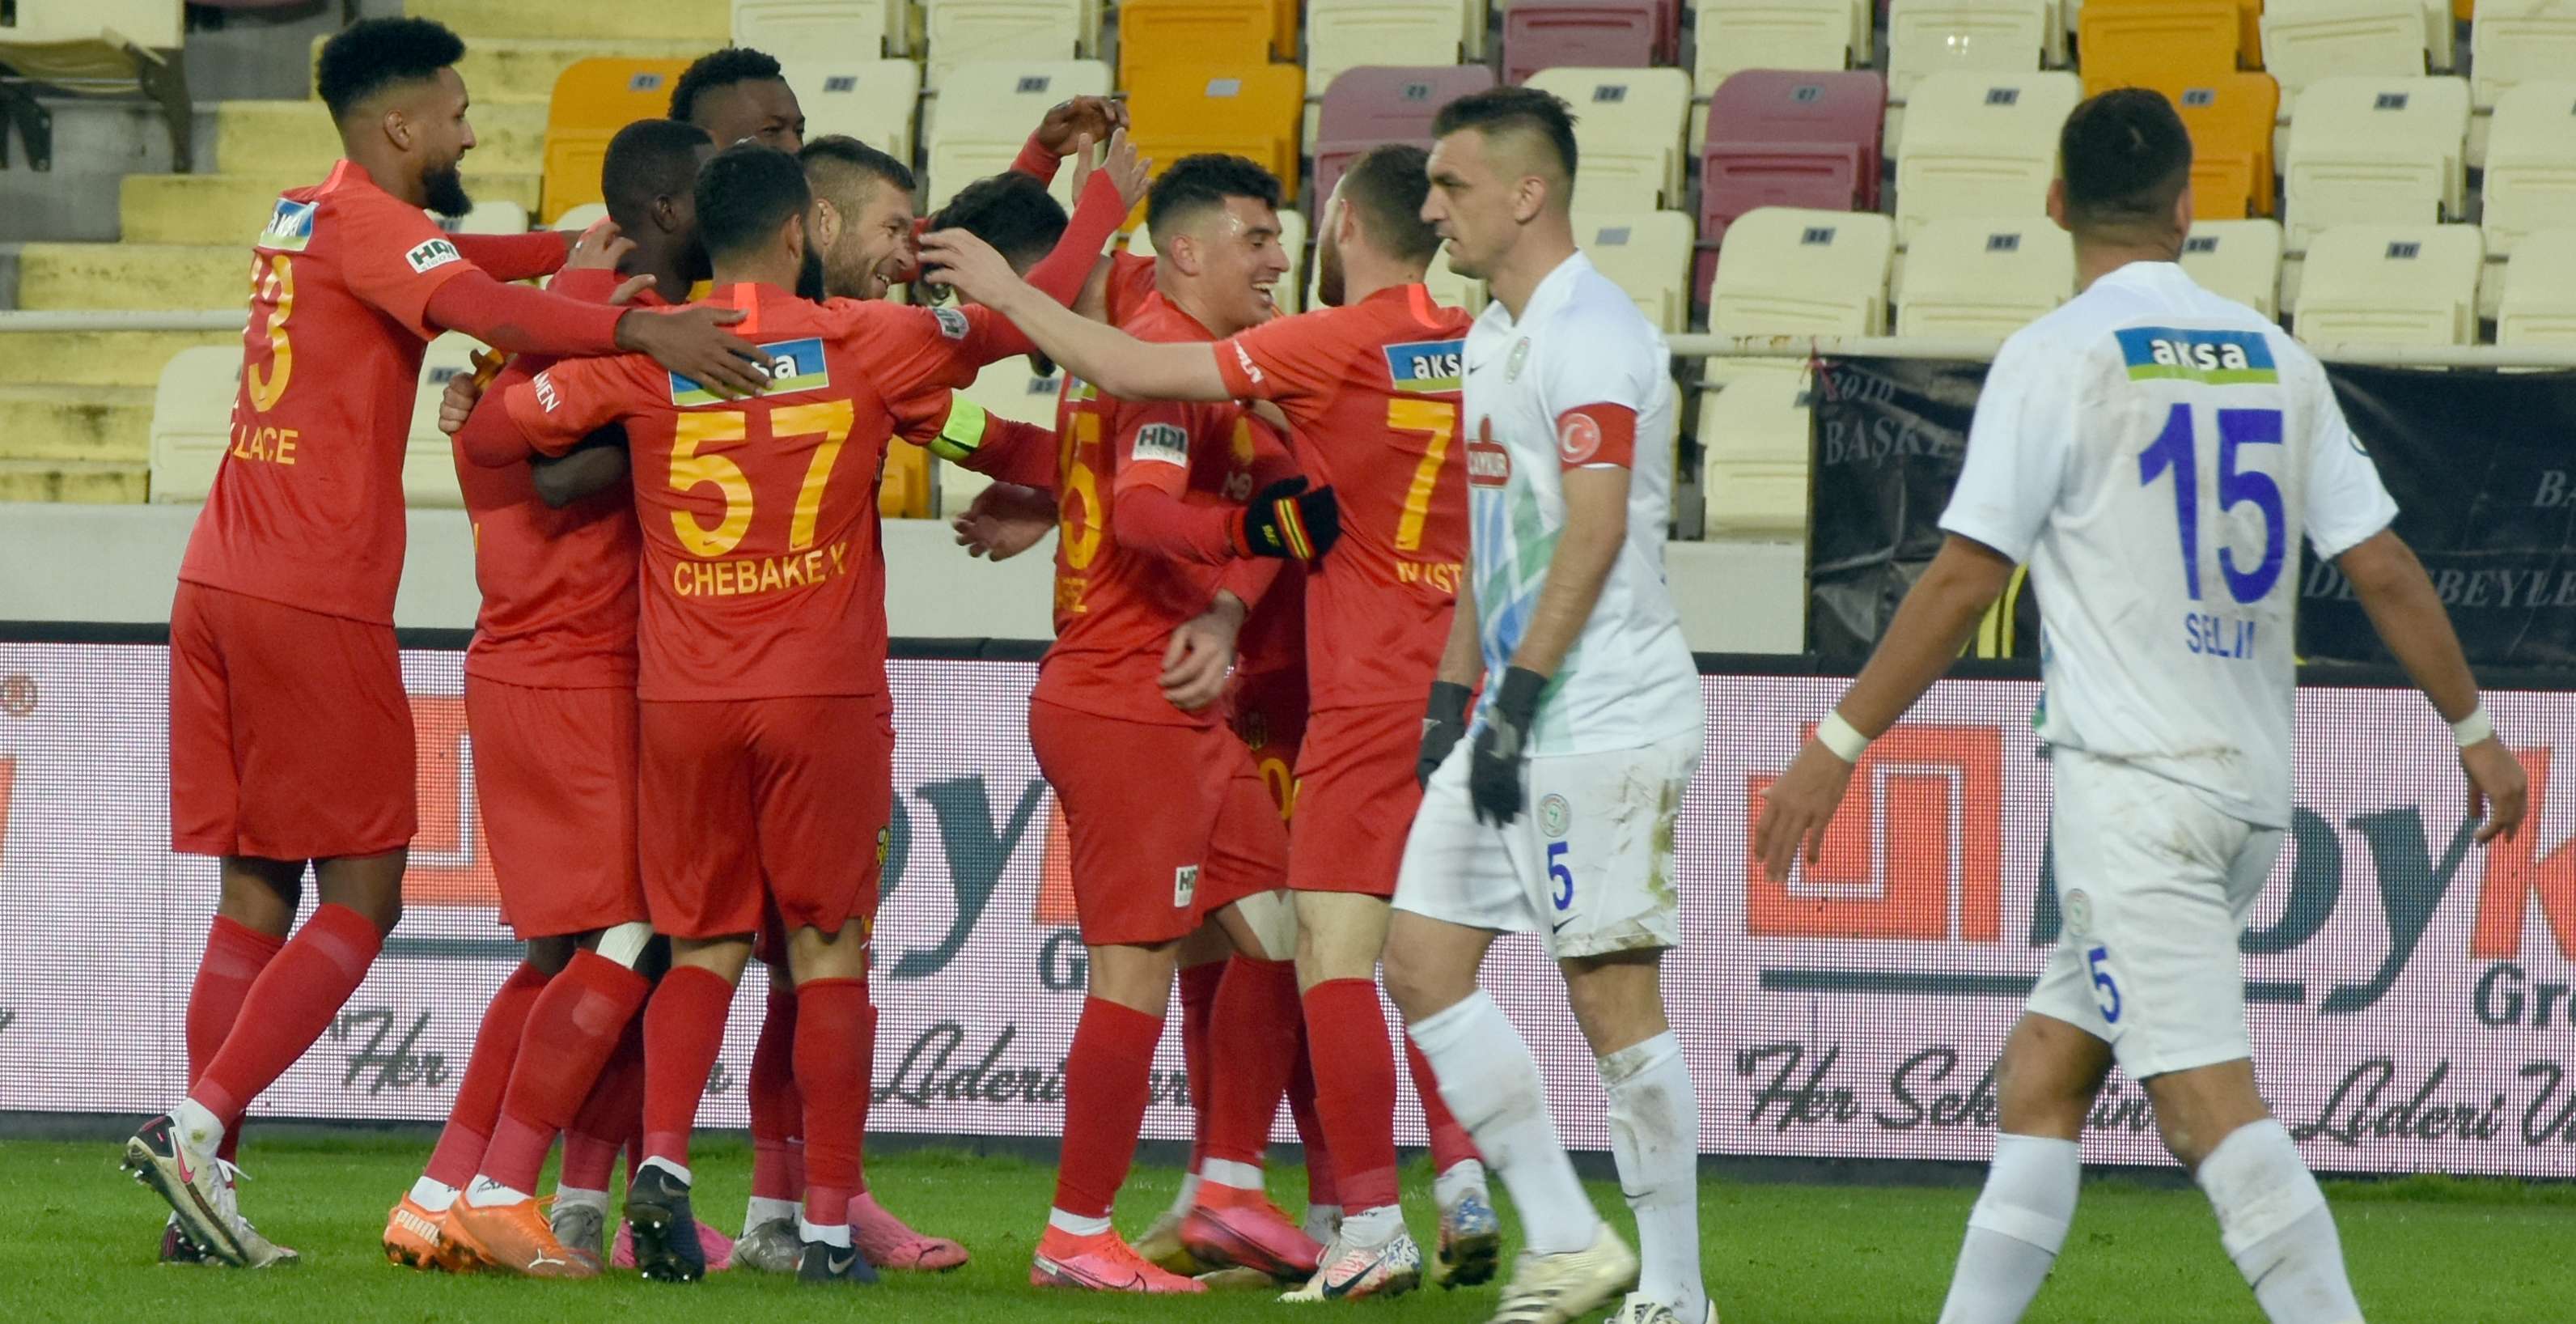 Yeni Malatyaspor Goal Celebration vs. Rizespor 01/17/21